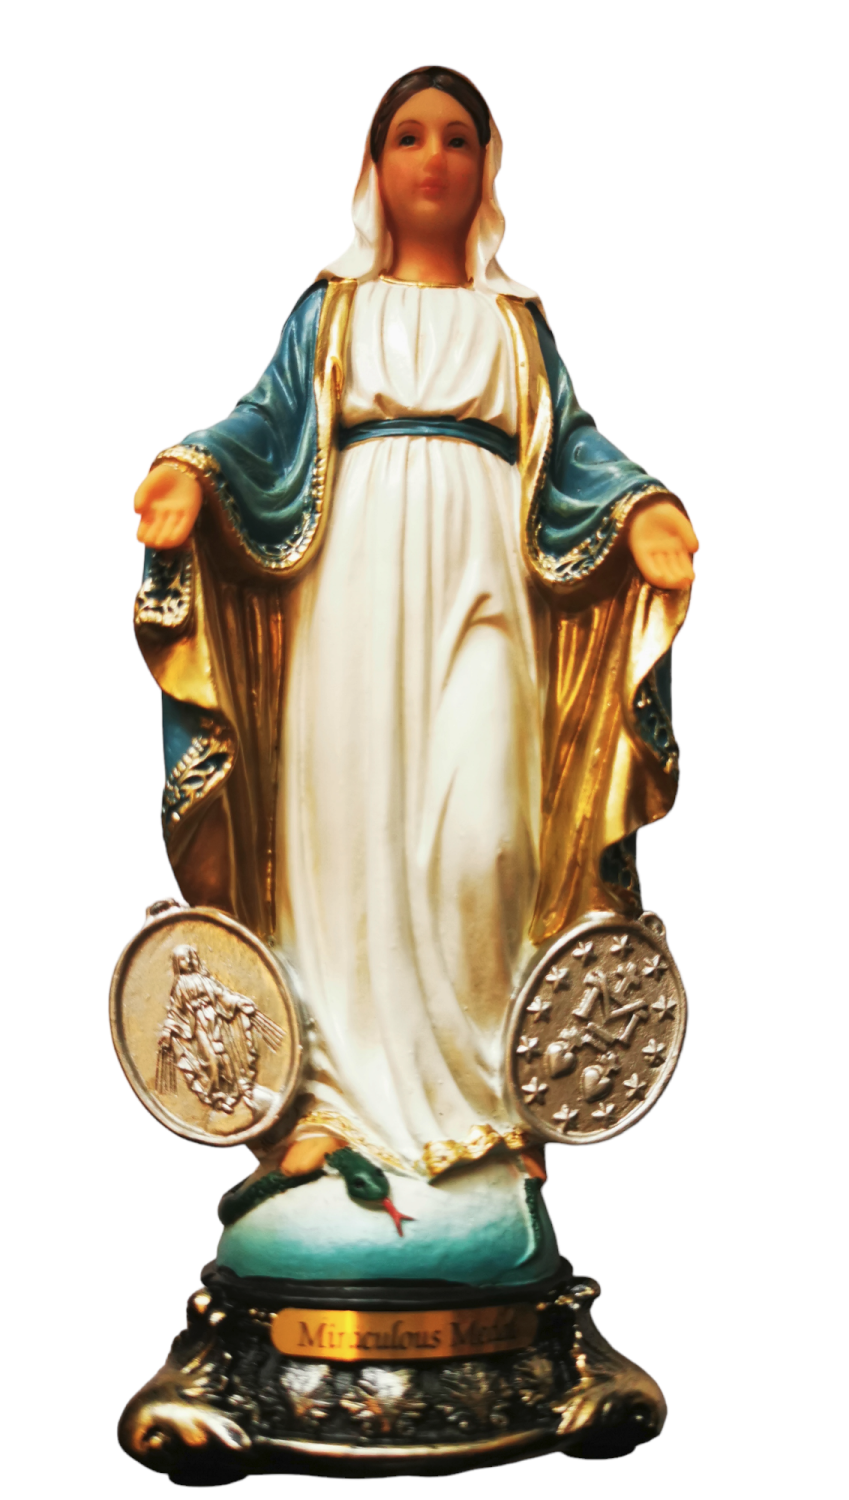 Miraculous medal 20cm statue ornament Catholic painted Saint figurine figur